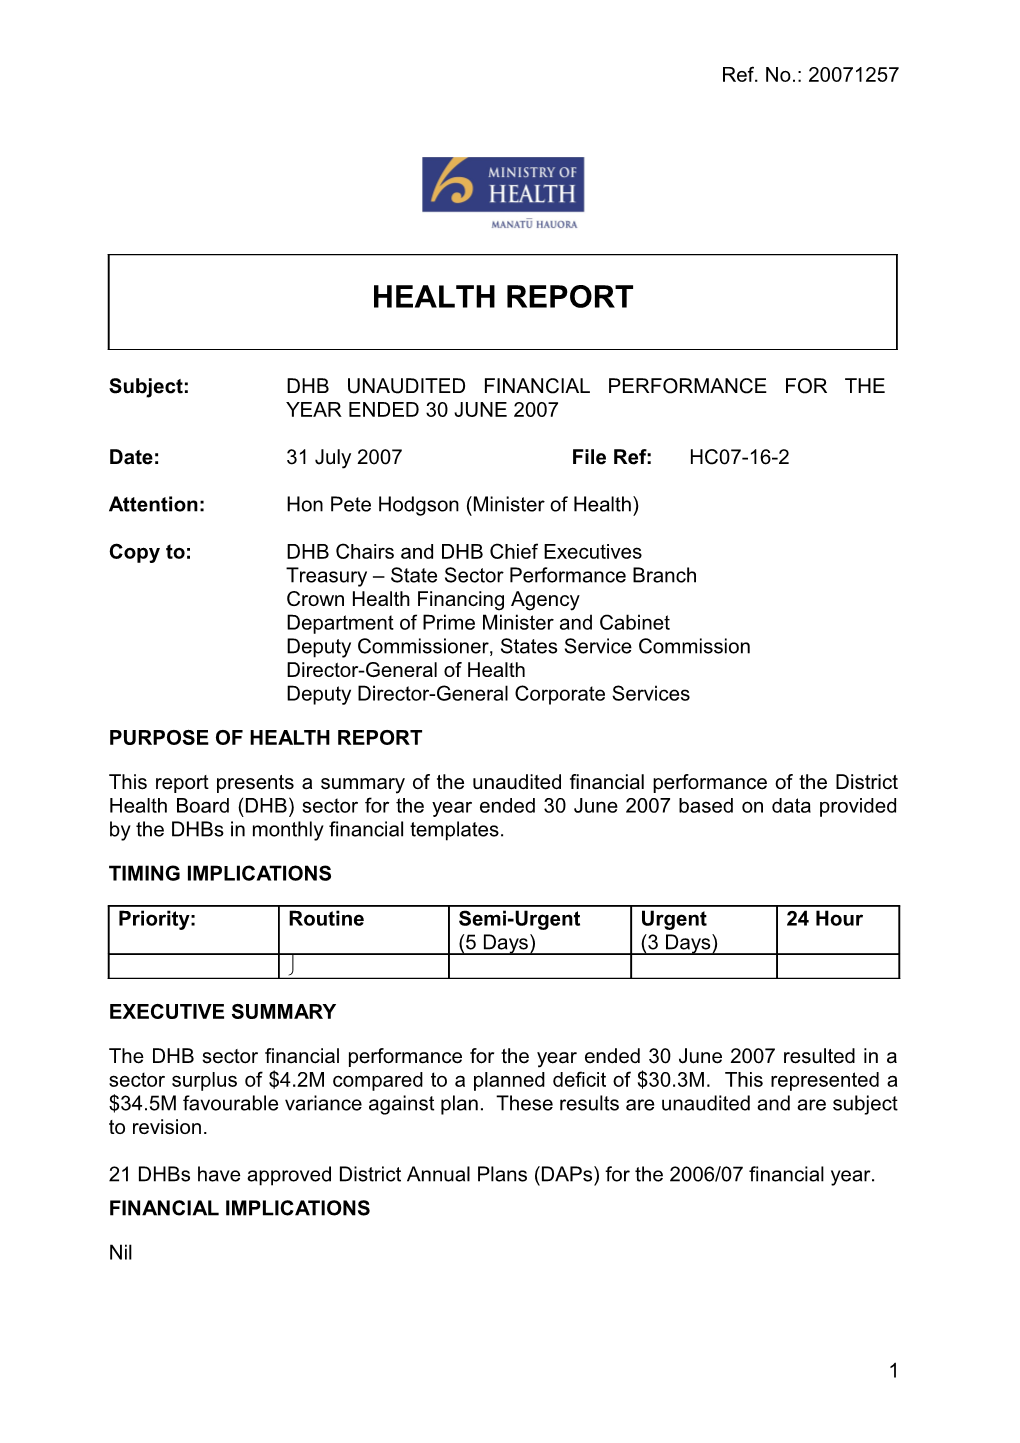 Purpose of Health Report